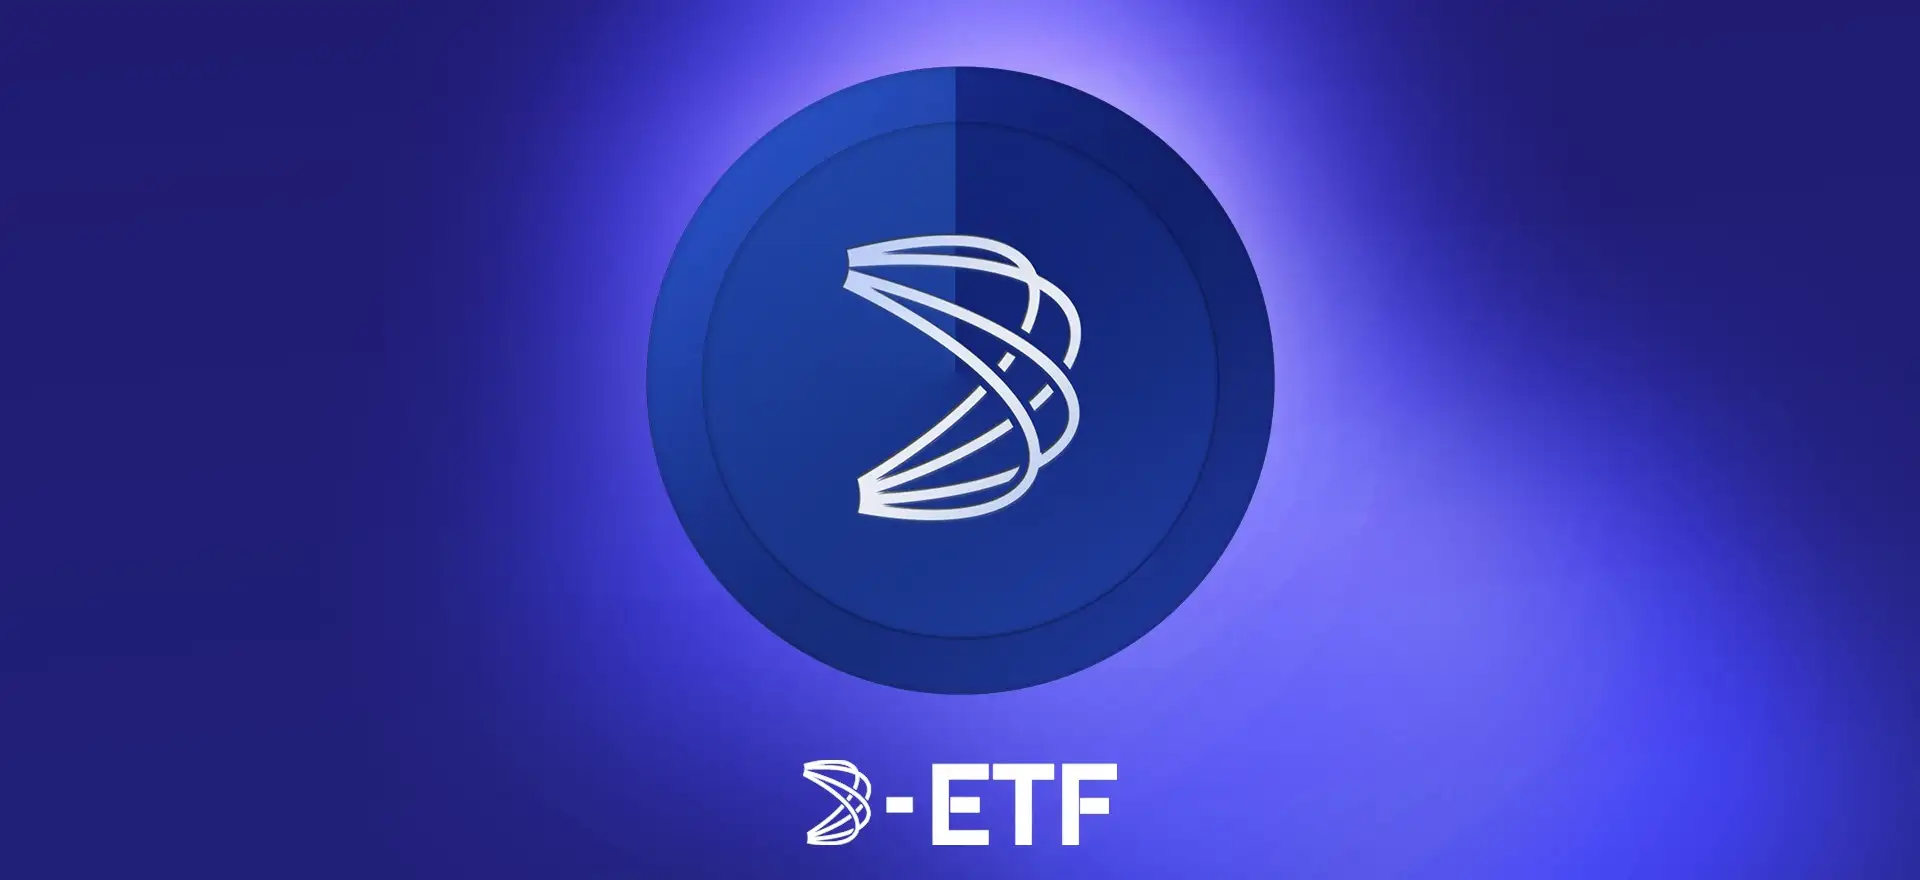 D-ETF